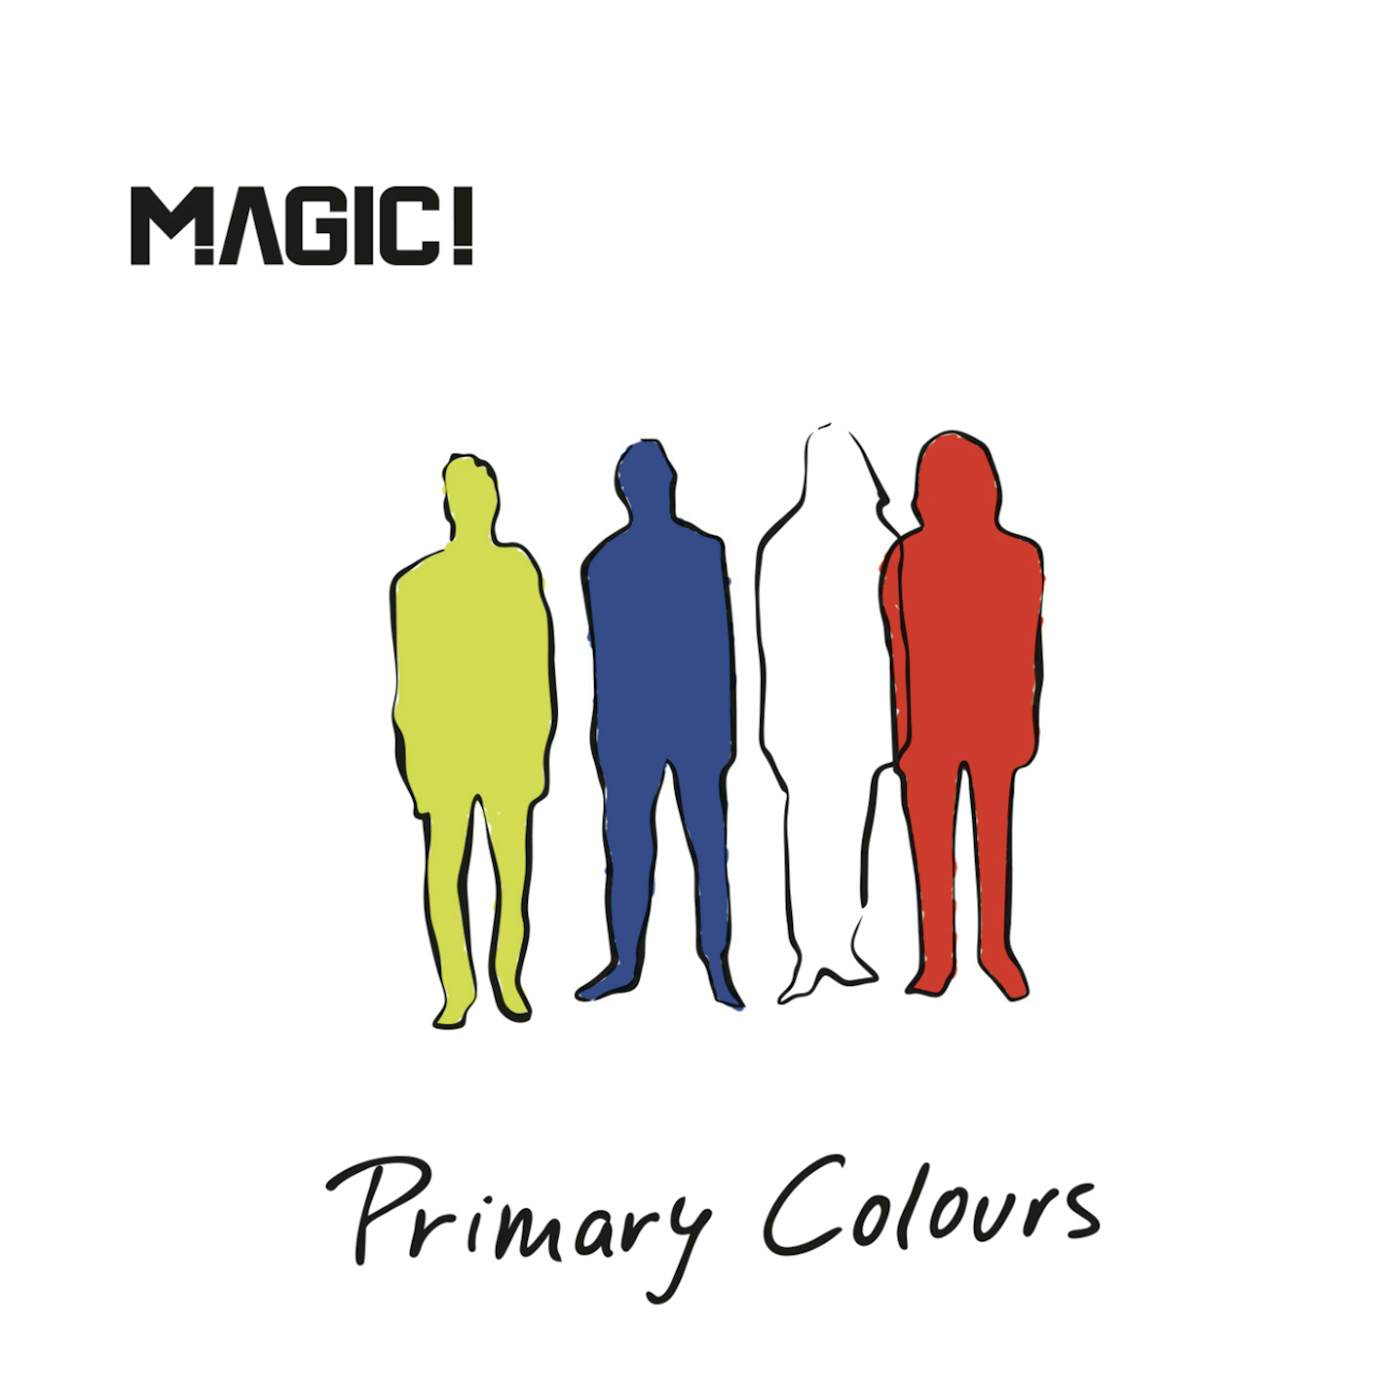 MAGIC! PRIMARY COLORS CD